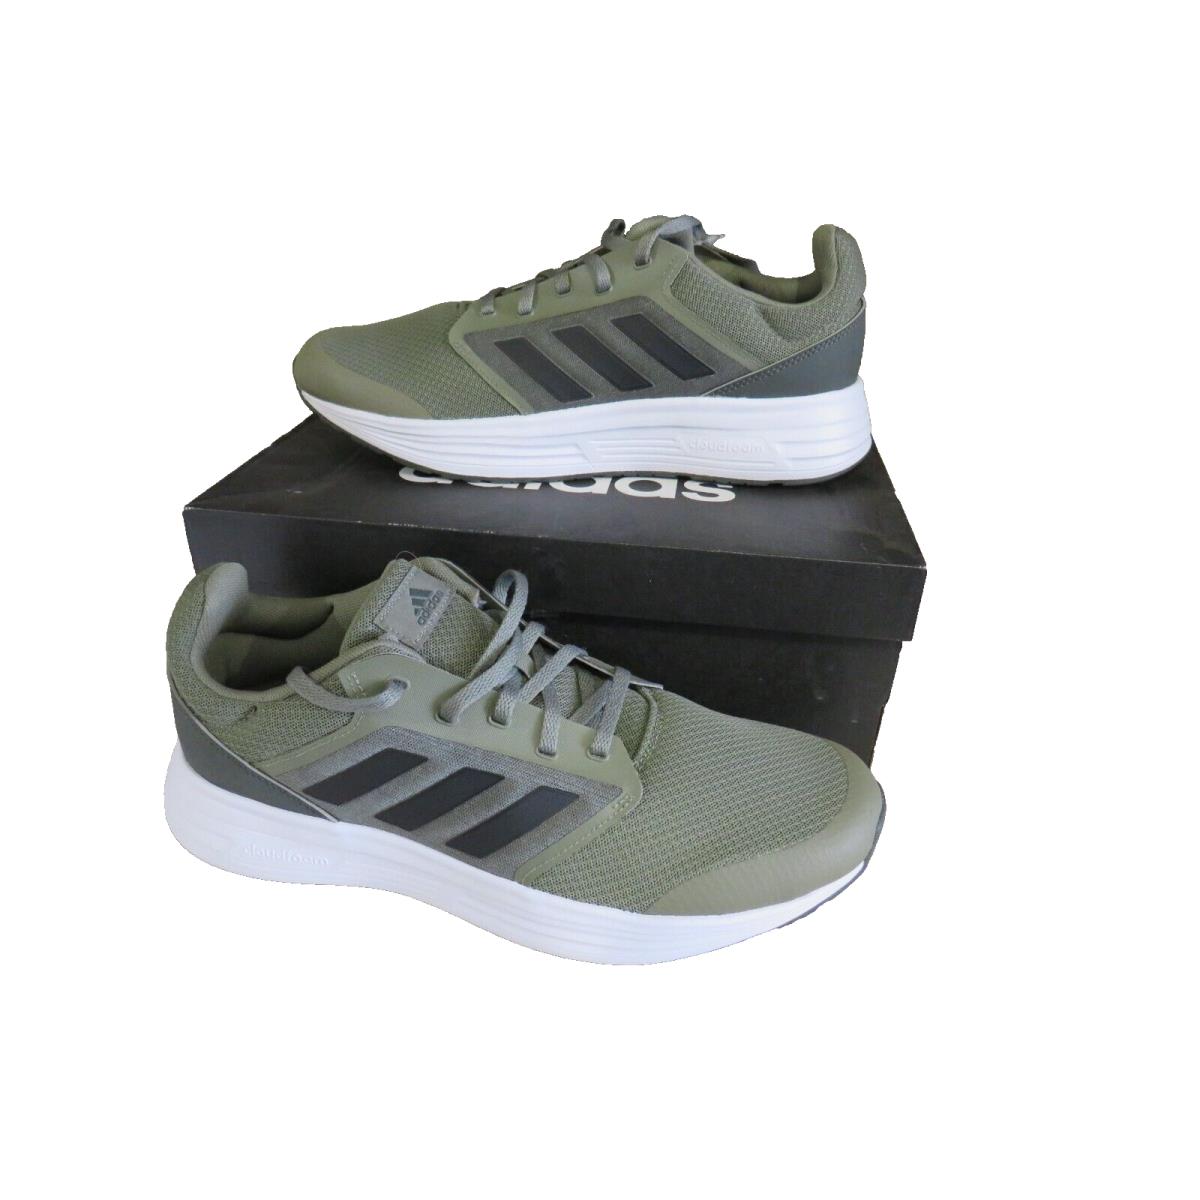 Adidas Shoes Mens Size 10.5 Green Galaxy 5 Training Running Athletic fw5704